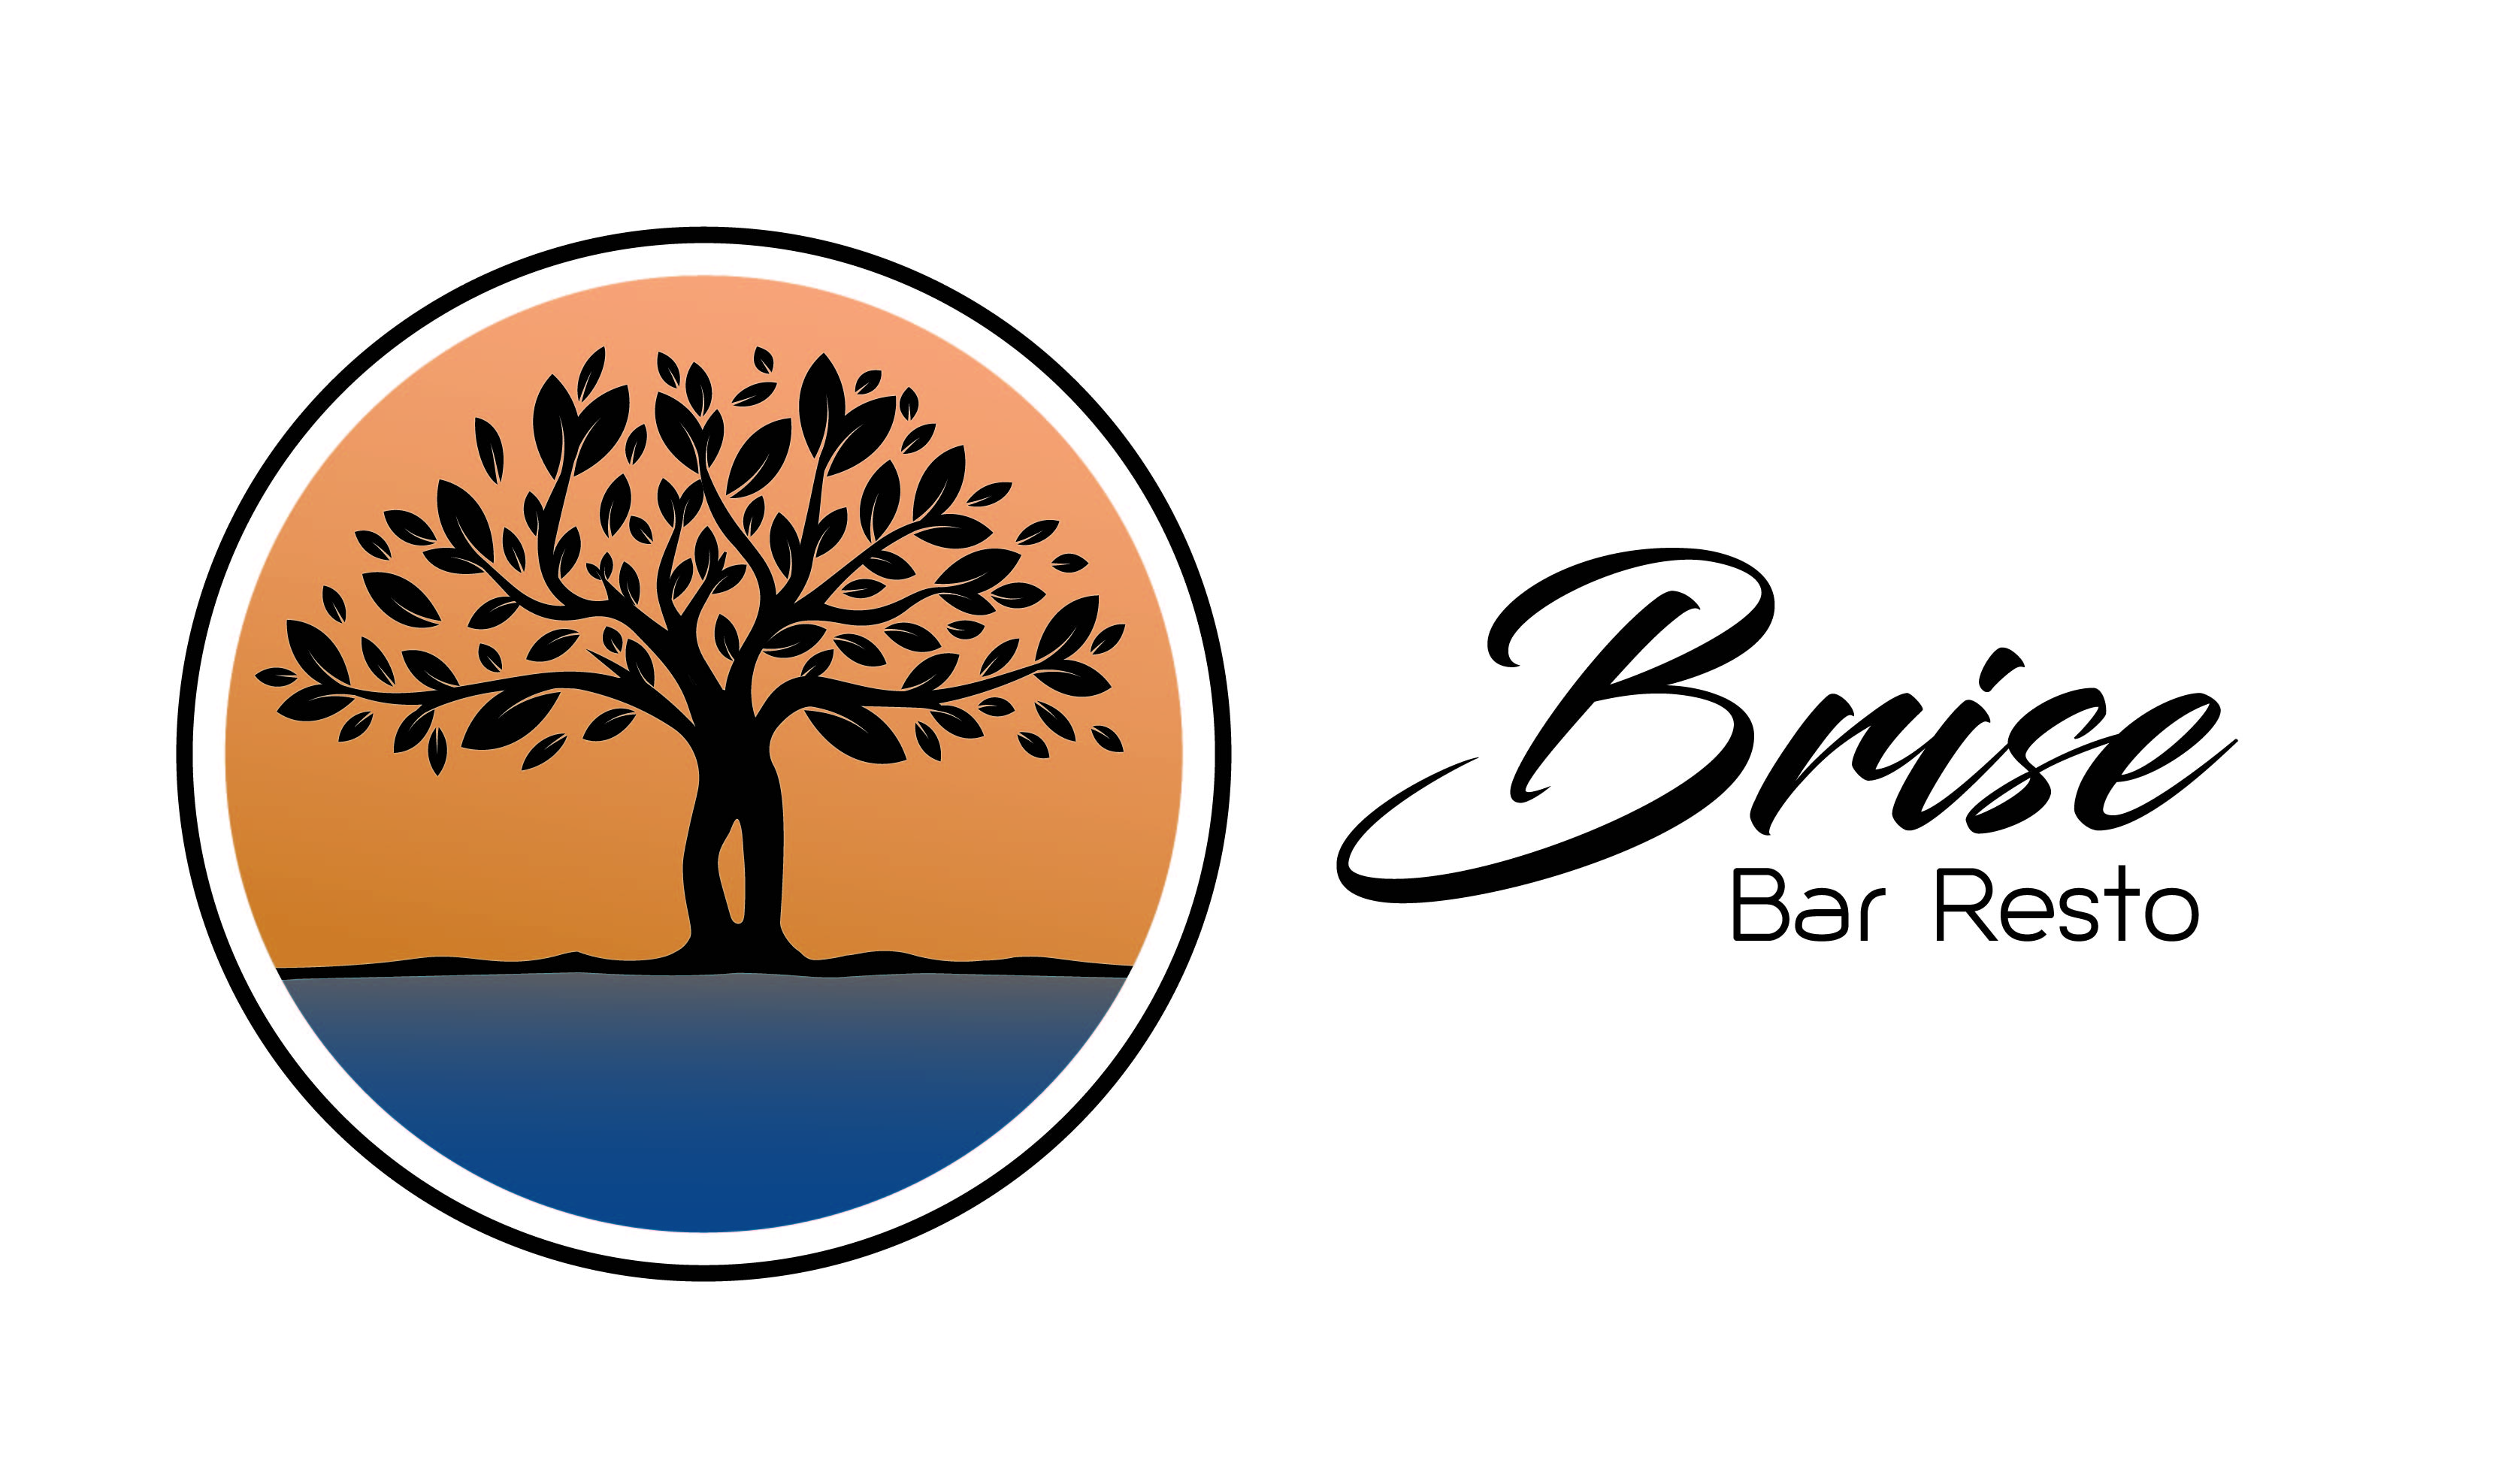 BRISE - Altitude Kite's restaurant